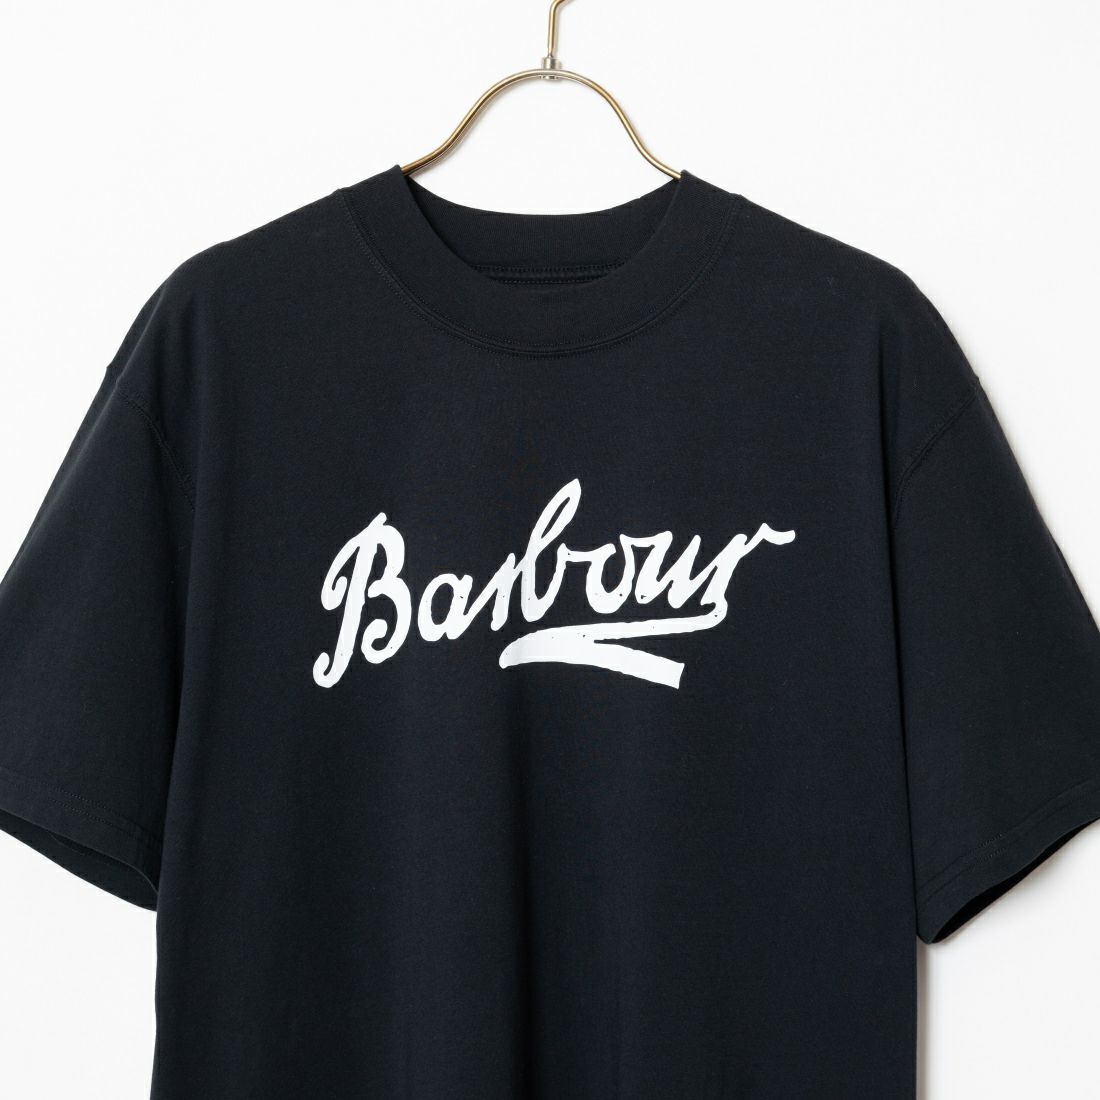 Barbour [バブアー] Grainger アーカイブ ロゴ リラックスフィット Tシャツ [MTS1259] BLACK